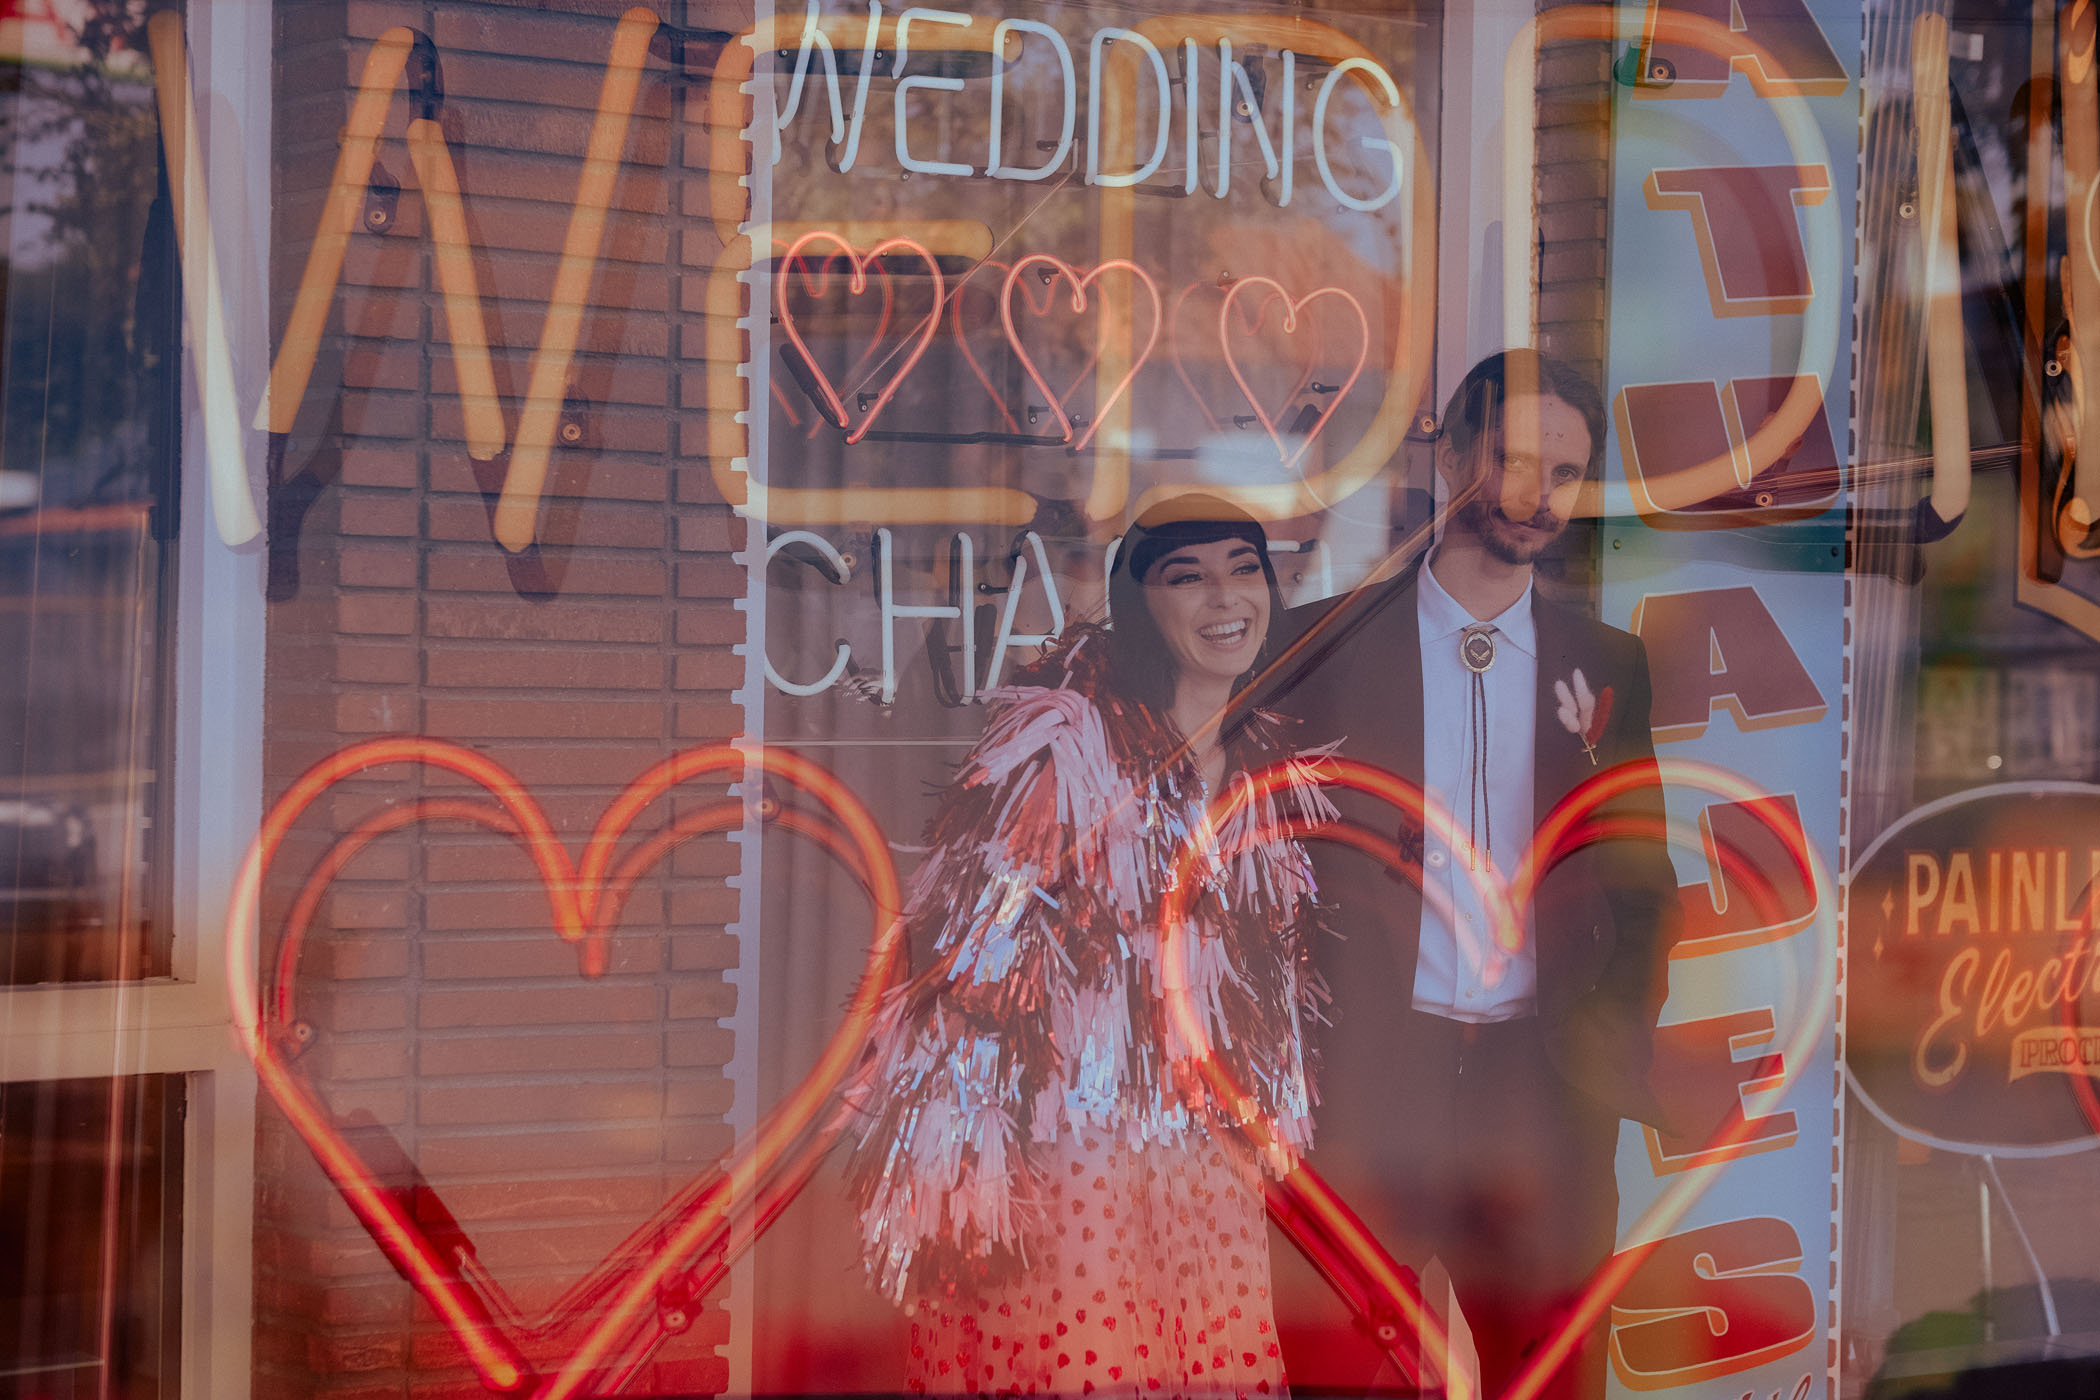 A Dreamy Pink Wedding in Vegas